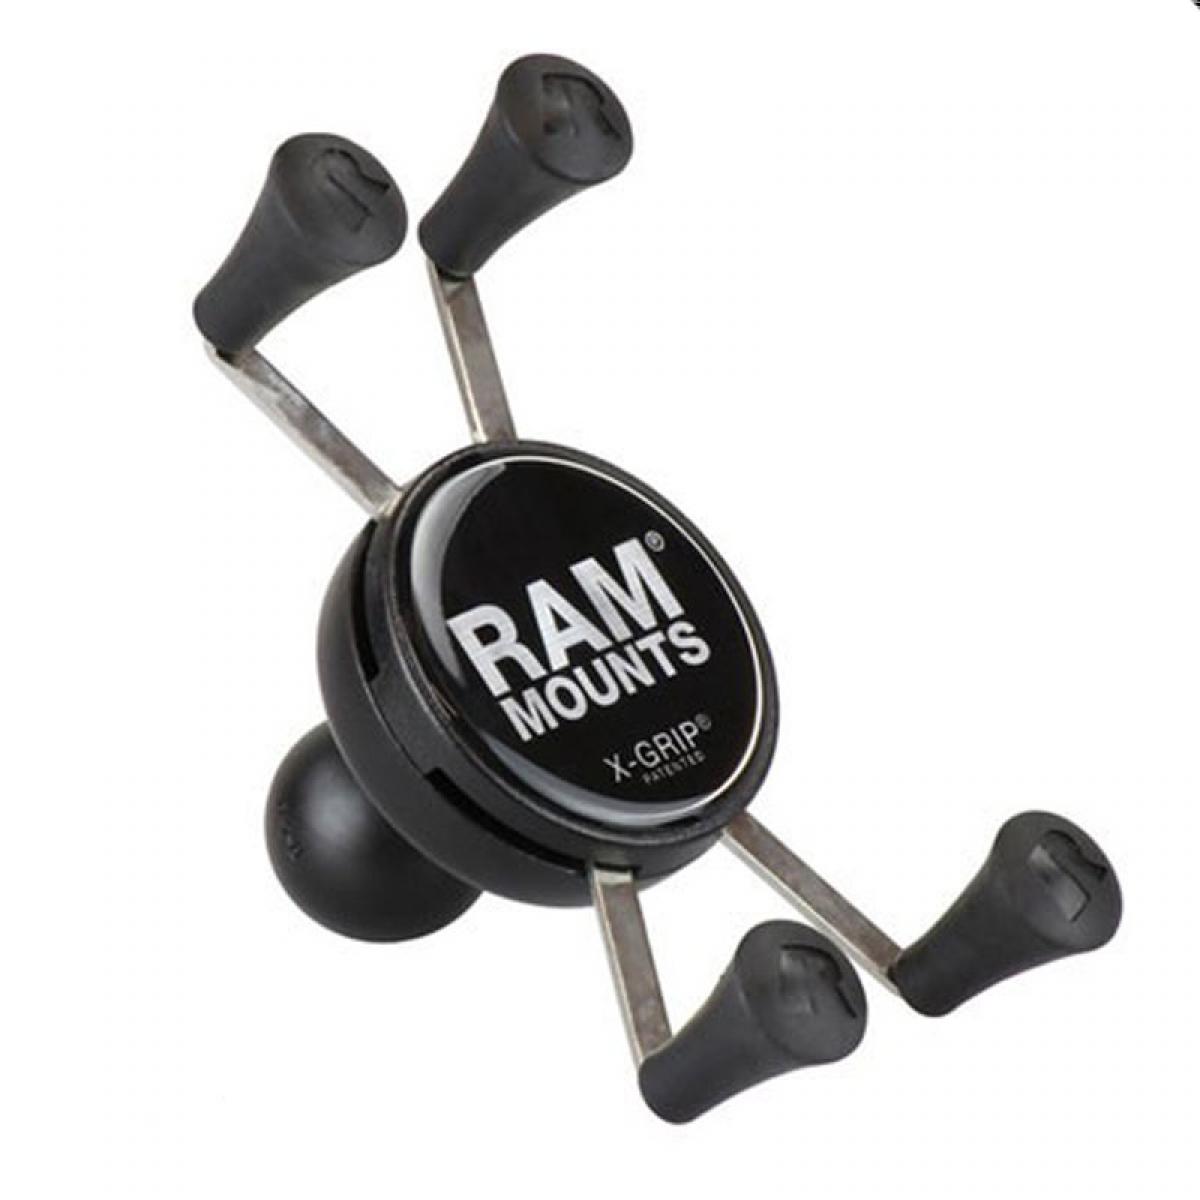 Genuine Motorcycle Ram Mount Universal X Grip Smart phone holder